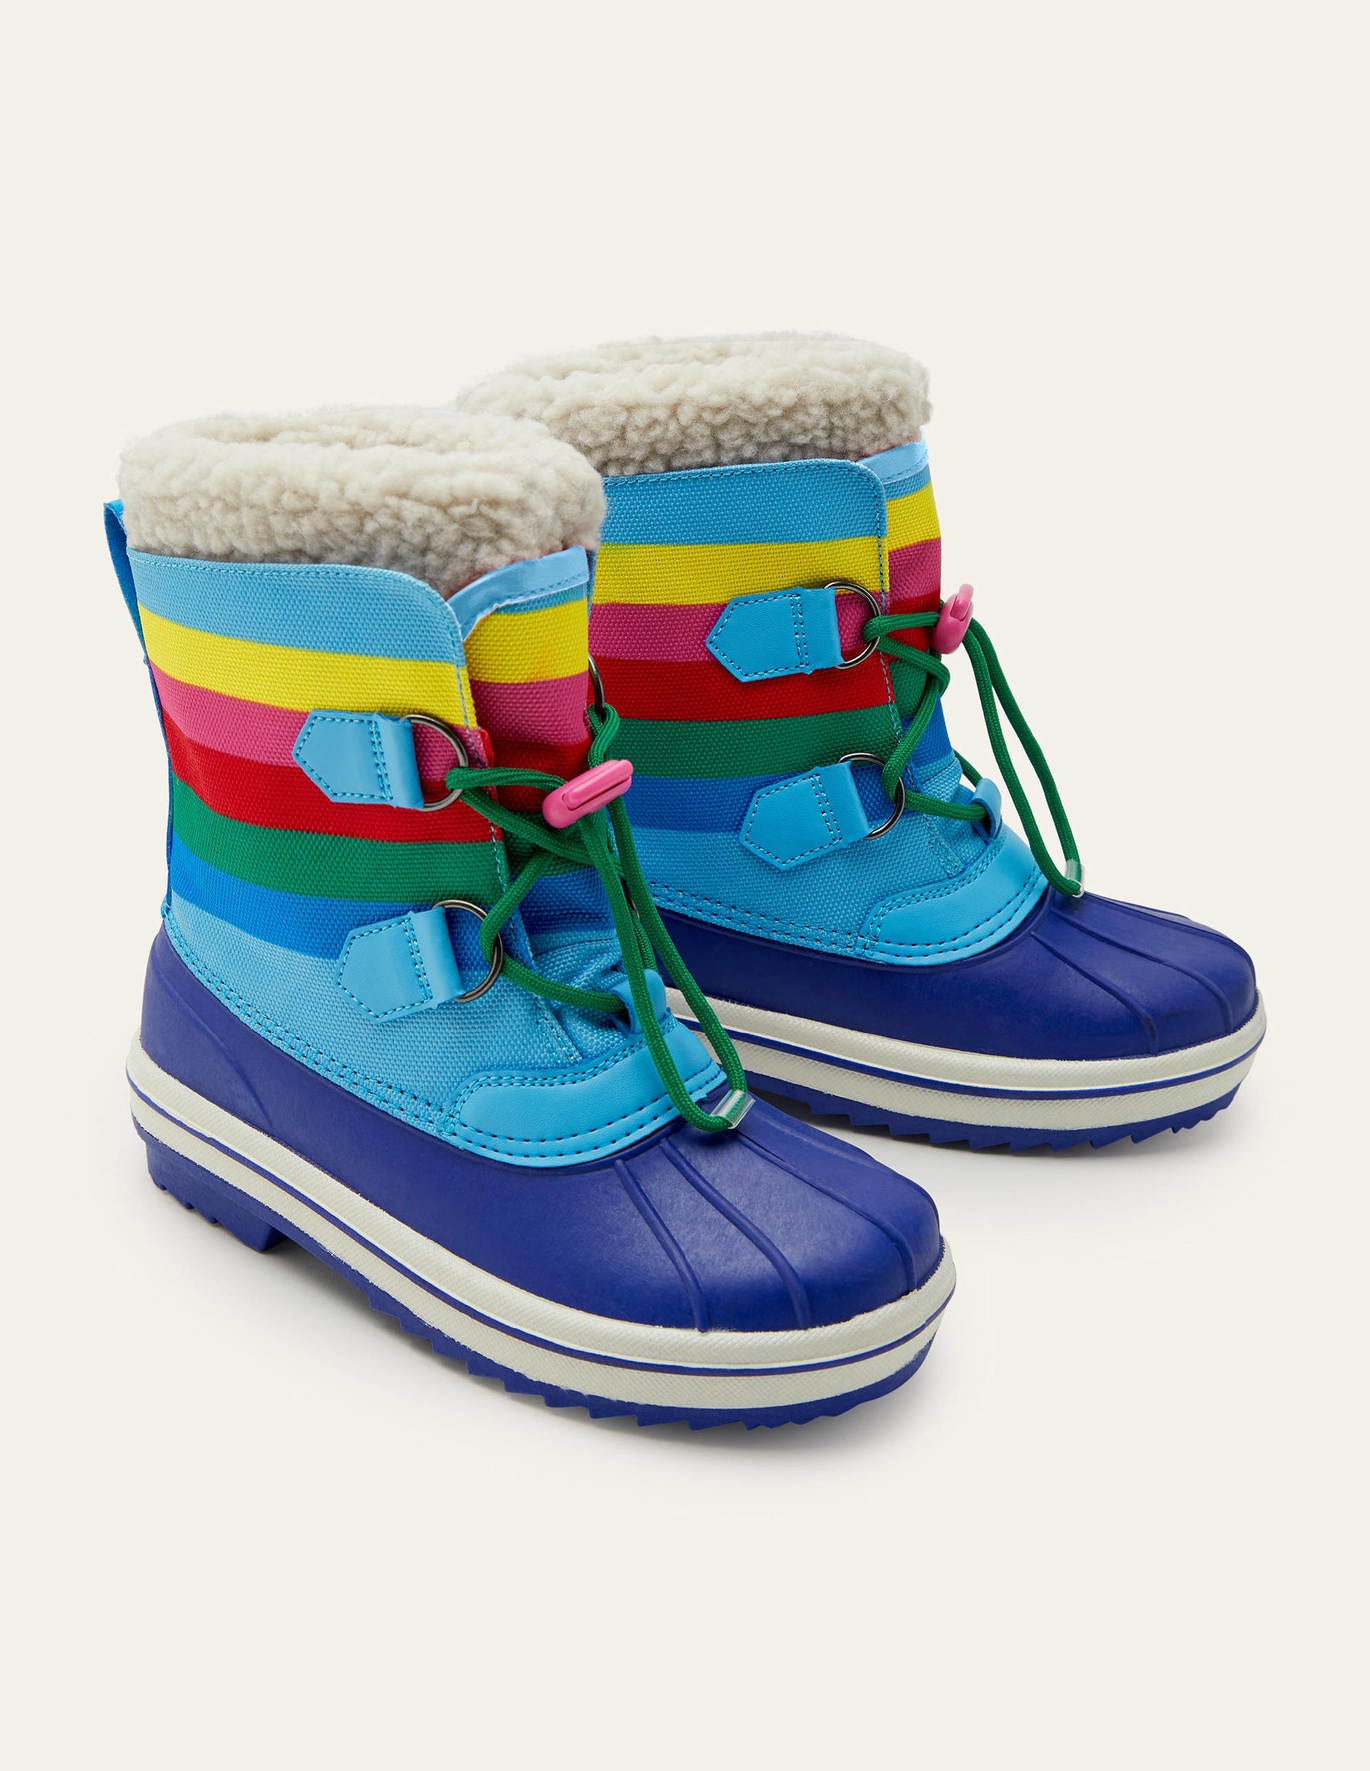 Boden All Weather Boots - Multi Colourblock